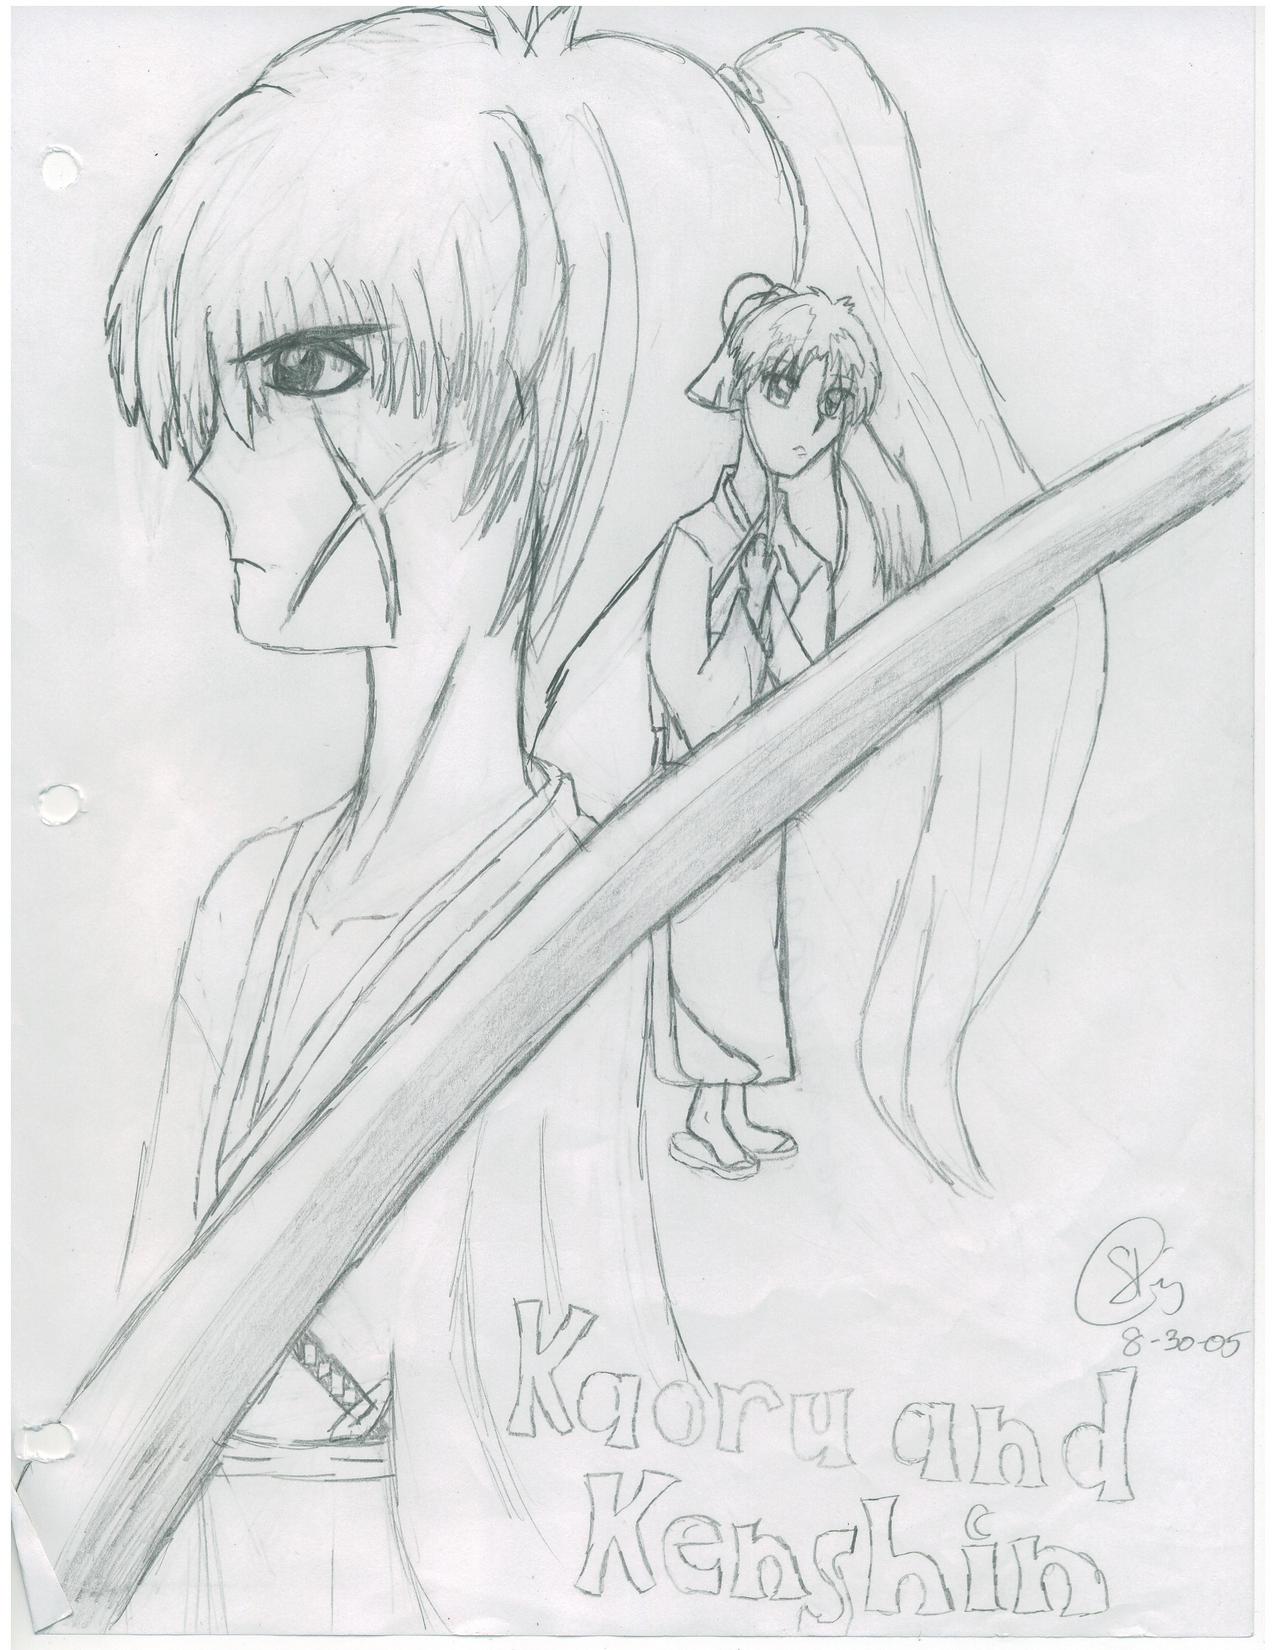 Kenshin &Kaoru 1 by LiL_NeKo_DeMoN